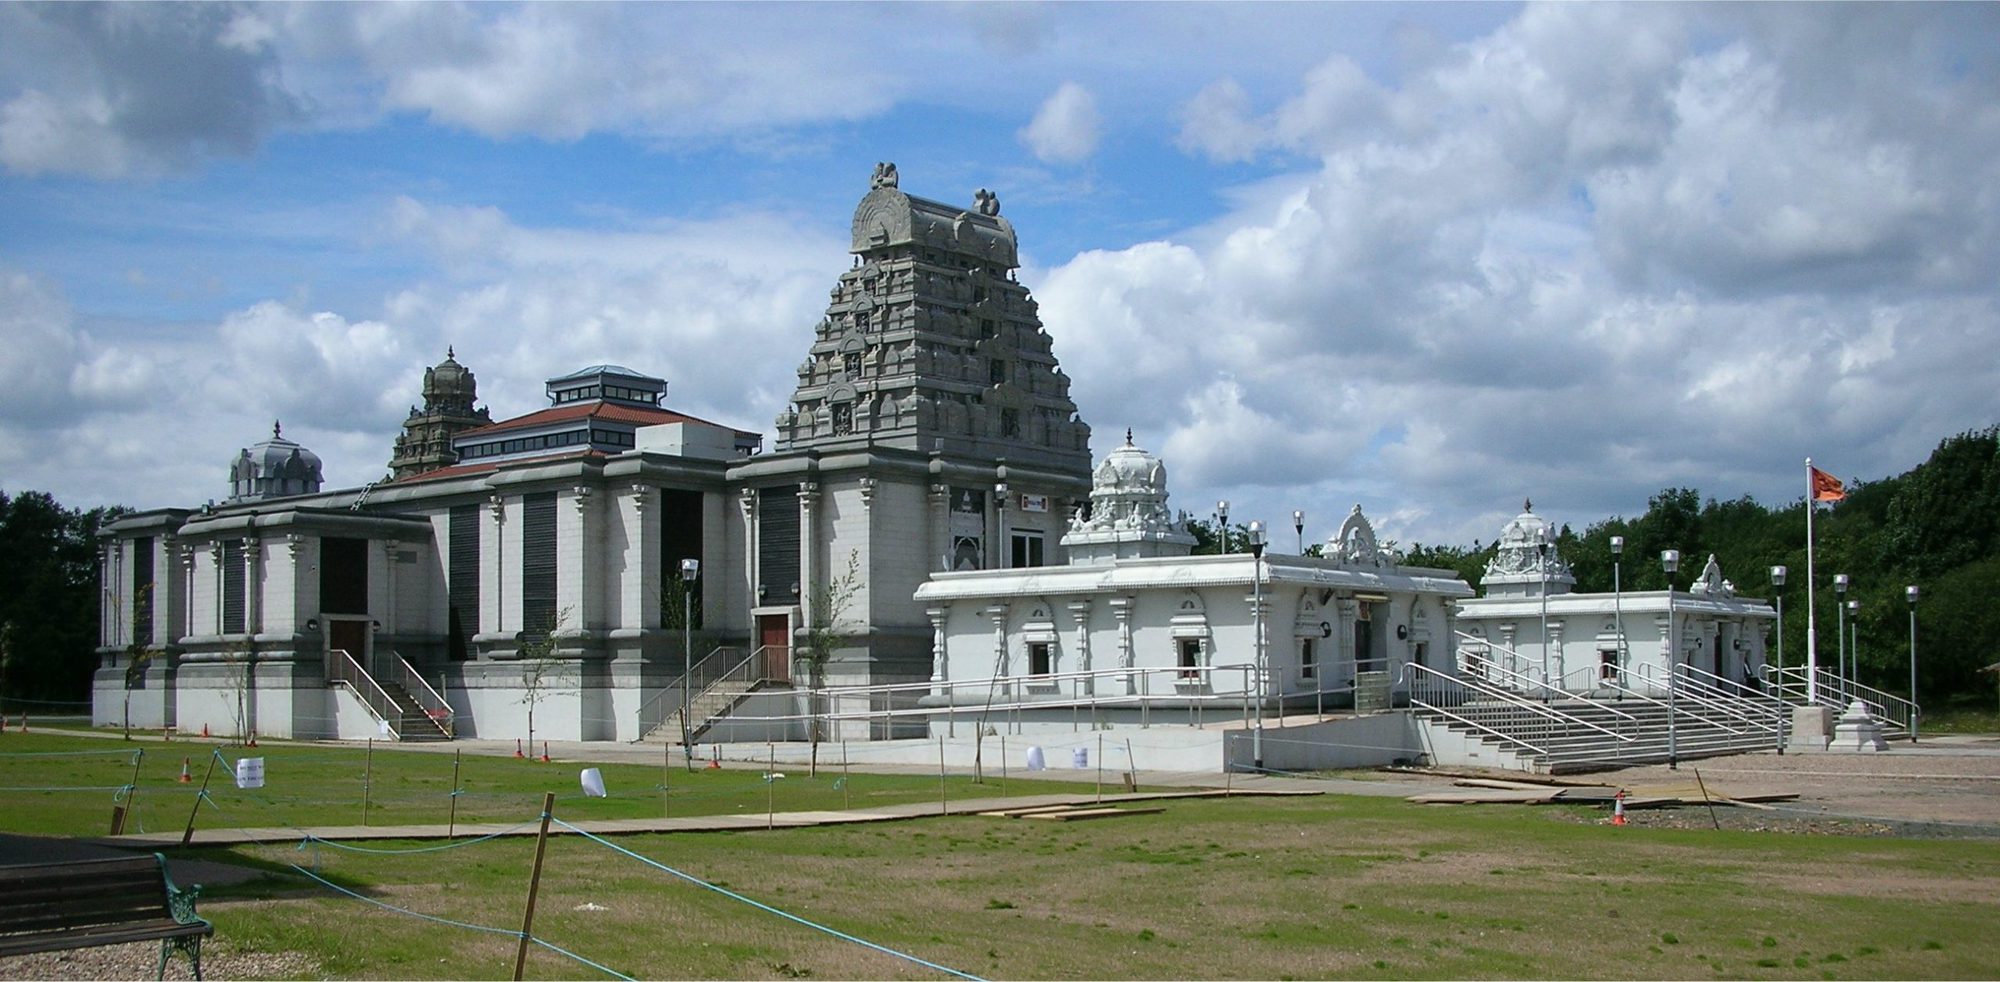 श्री वेंकटेश्वर बालाजी मंदिर Shri Venkateswara Balaji Temple - England